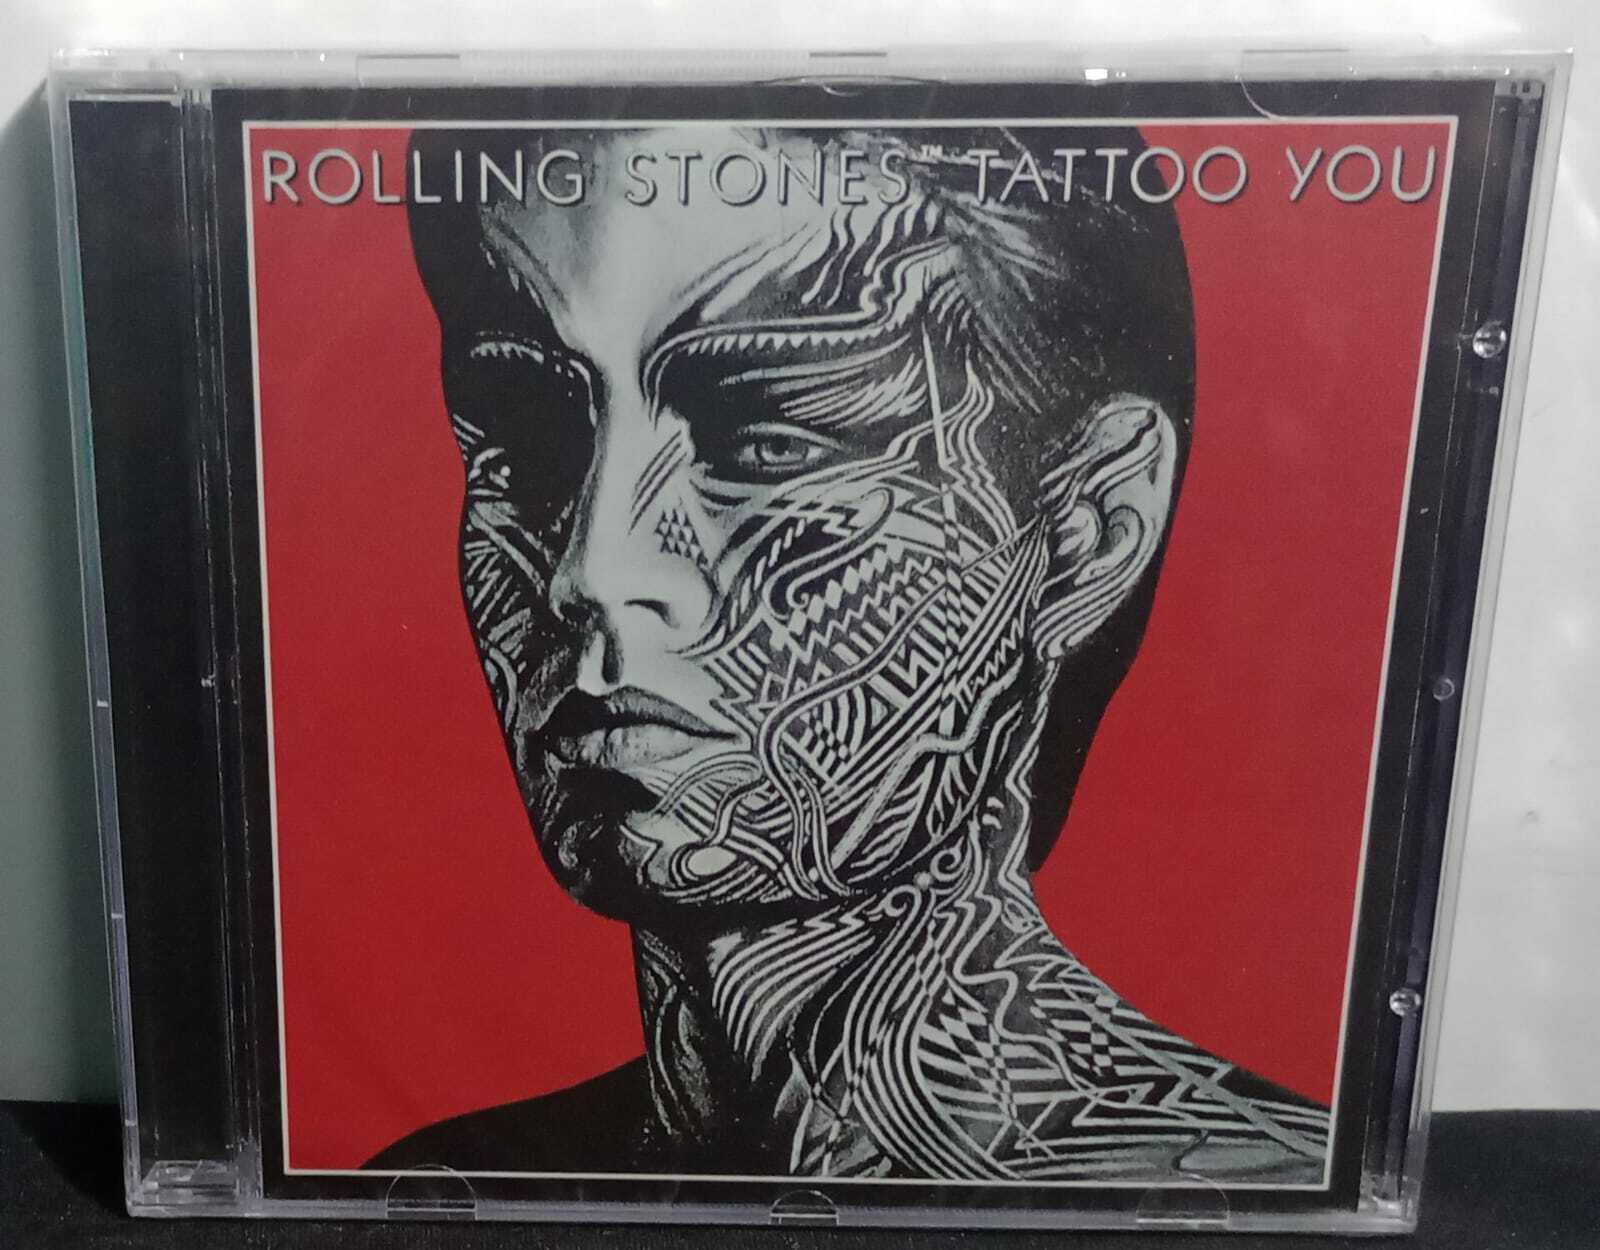 CD - Rolling Stones - Tattoo You (Imp/Lacrado)